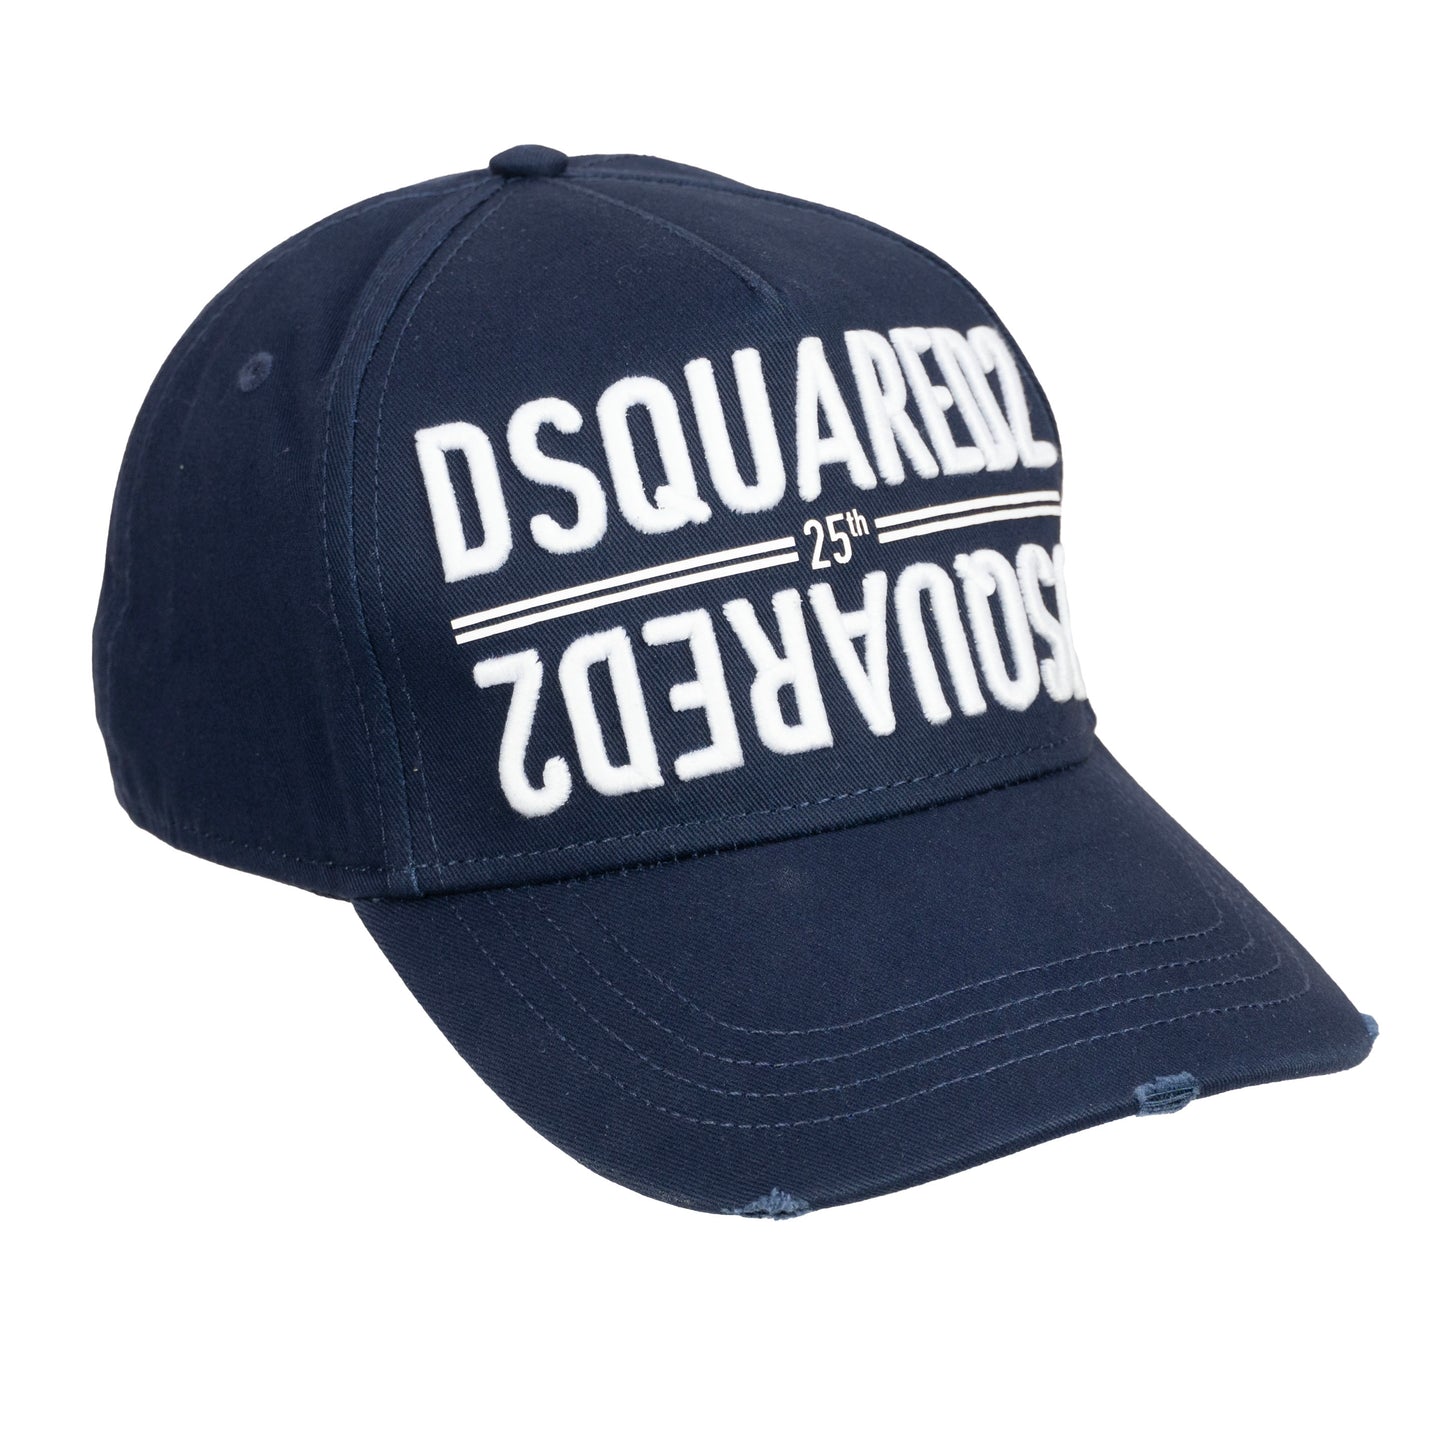 Dsquared2 Baseball Cap 25th